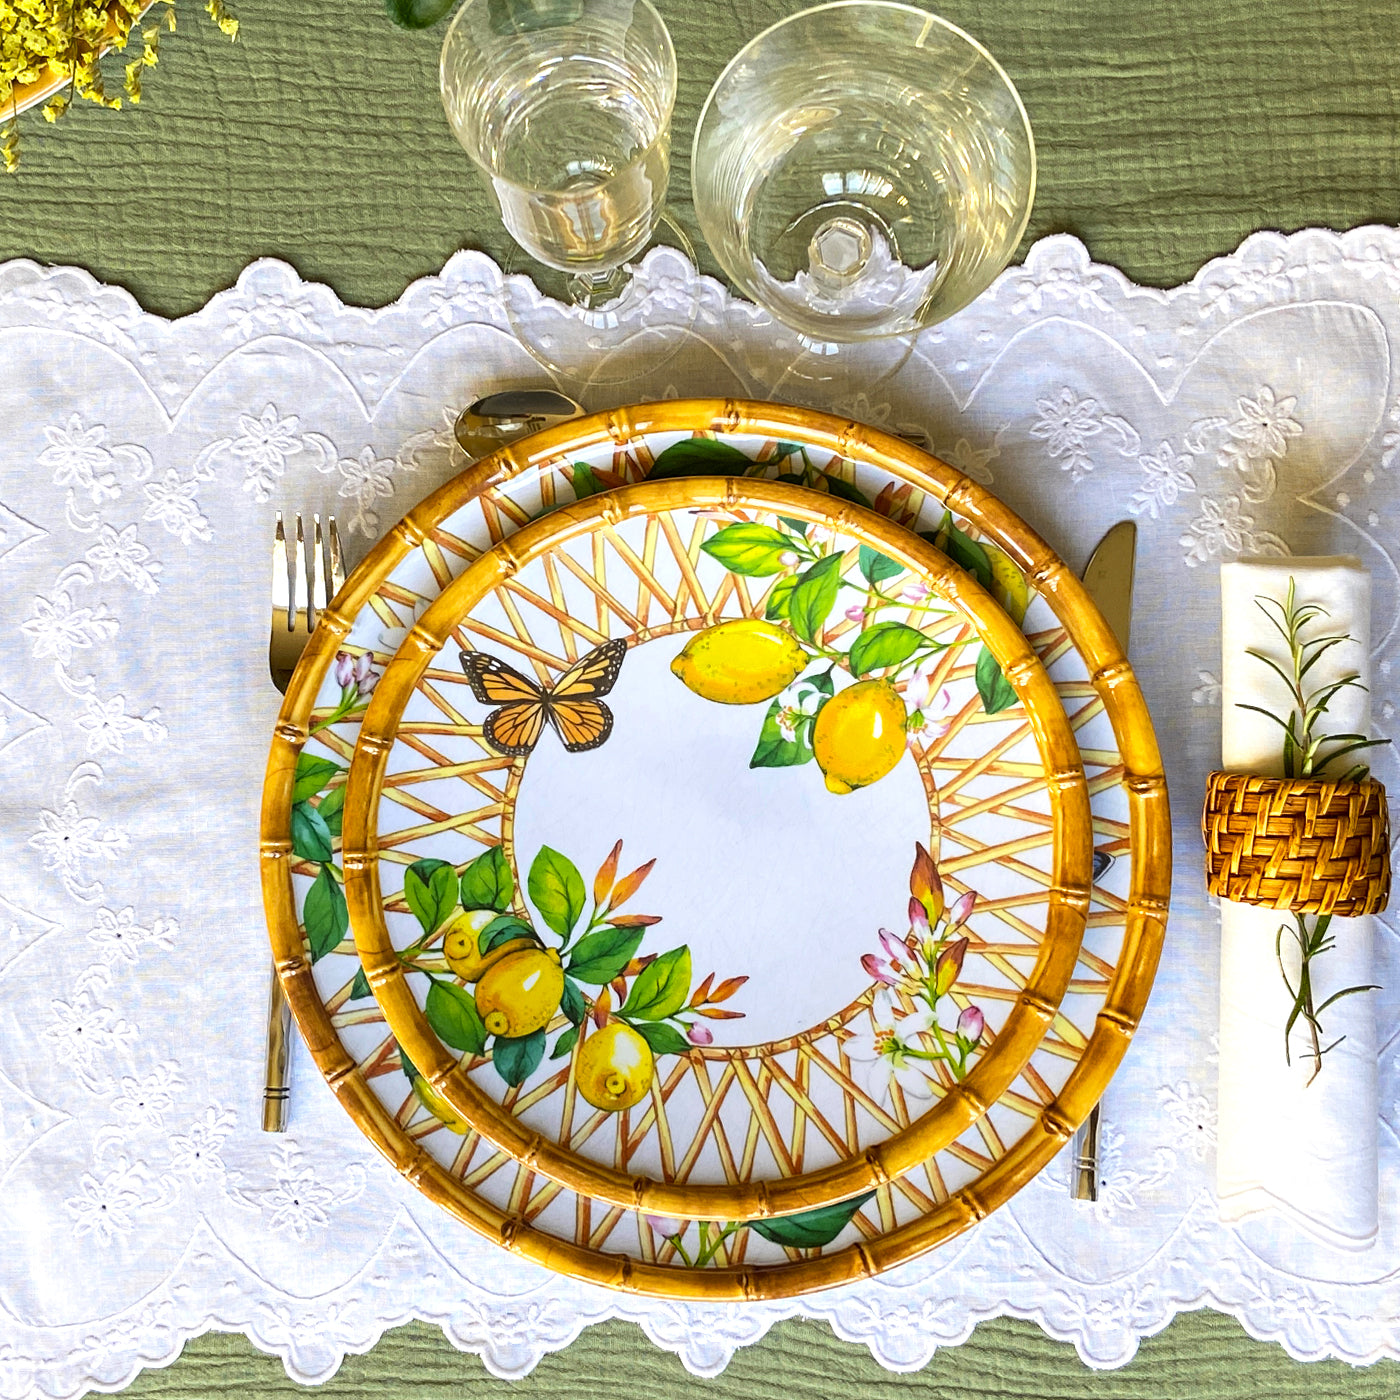 Dessertbord in melamine met citroenen - Ø 23 cm